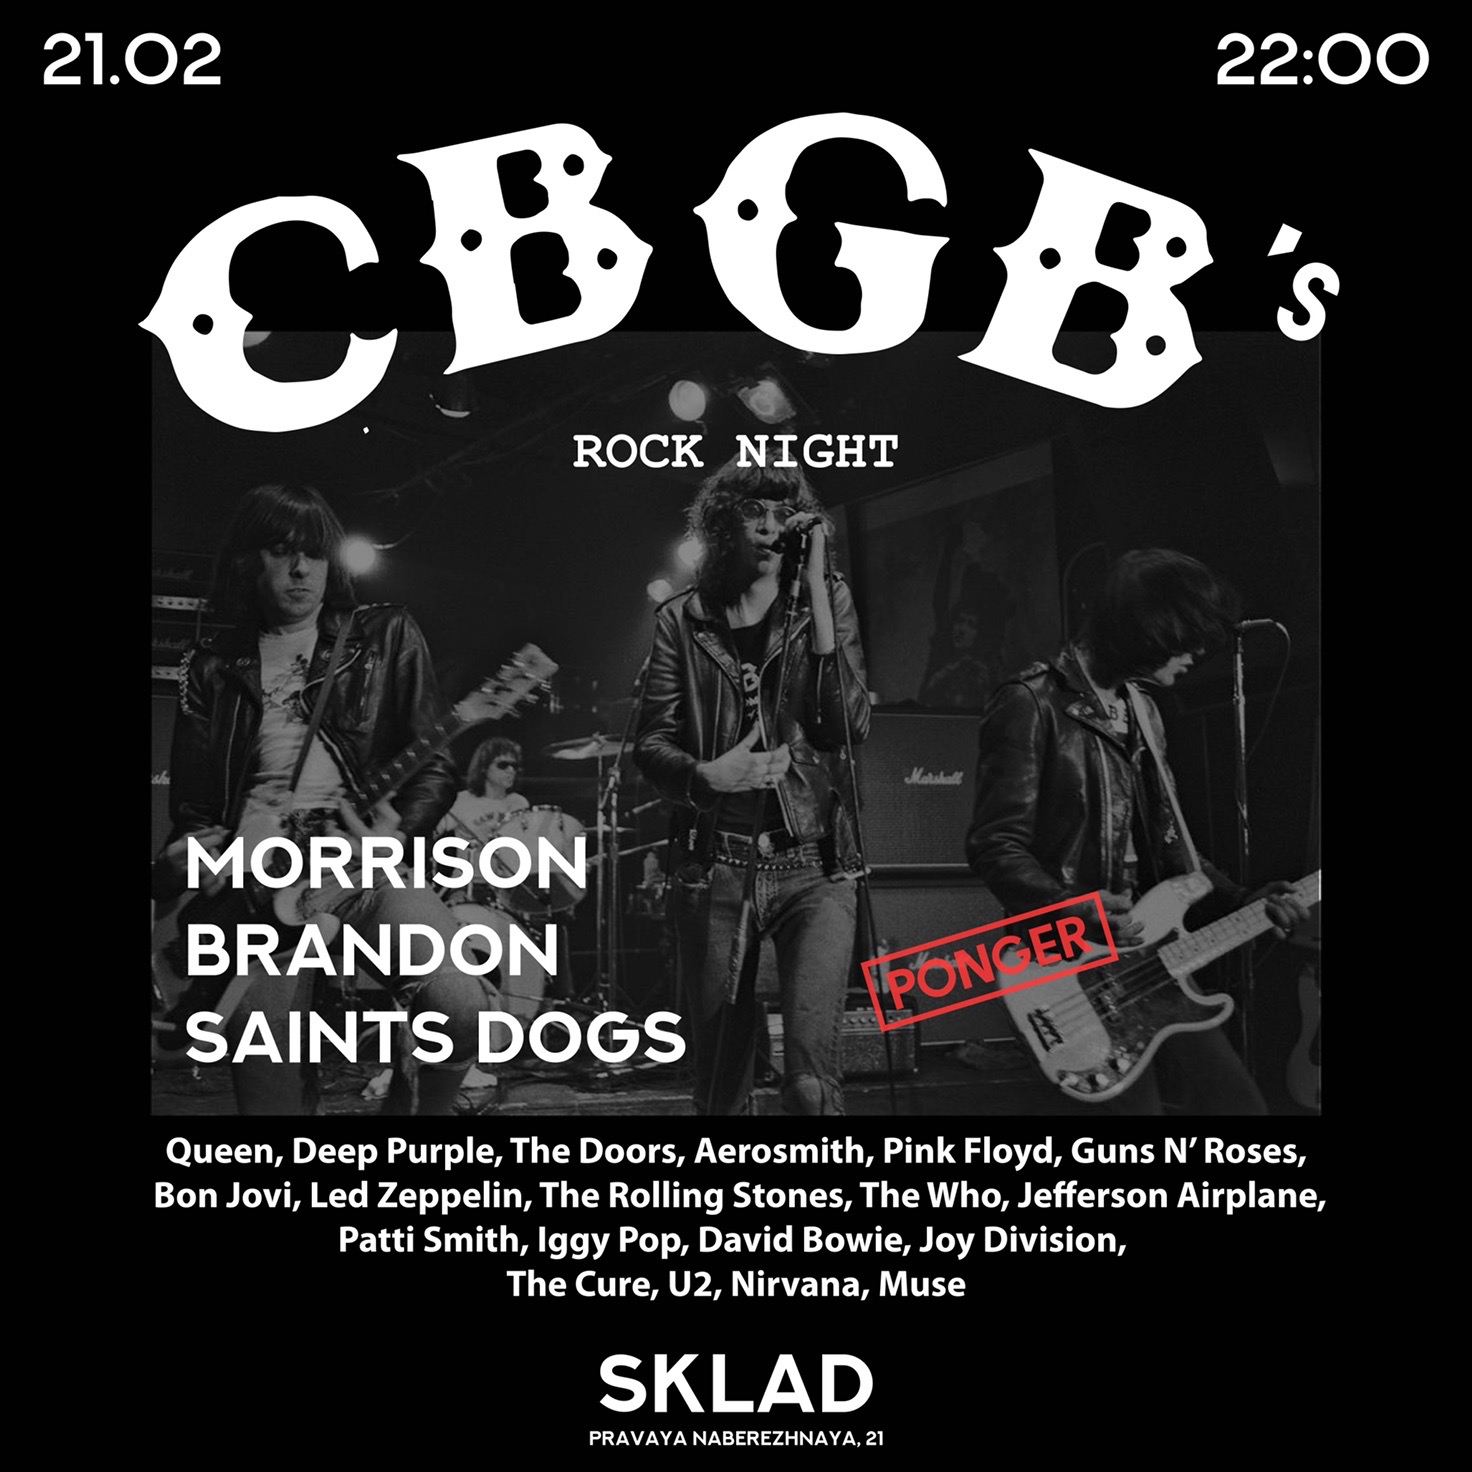 Вечеринка: CBGB's rock night 